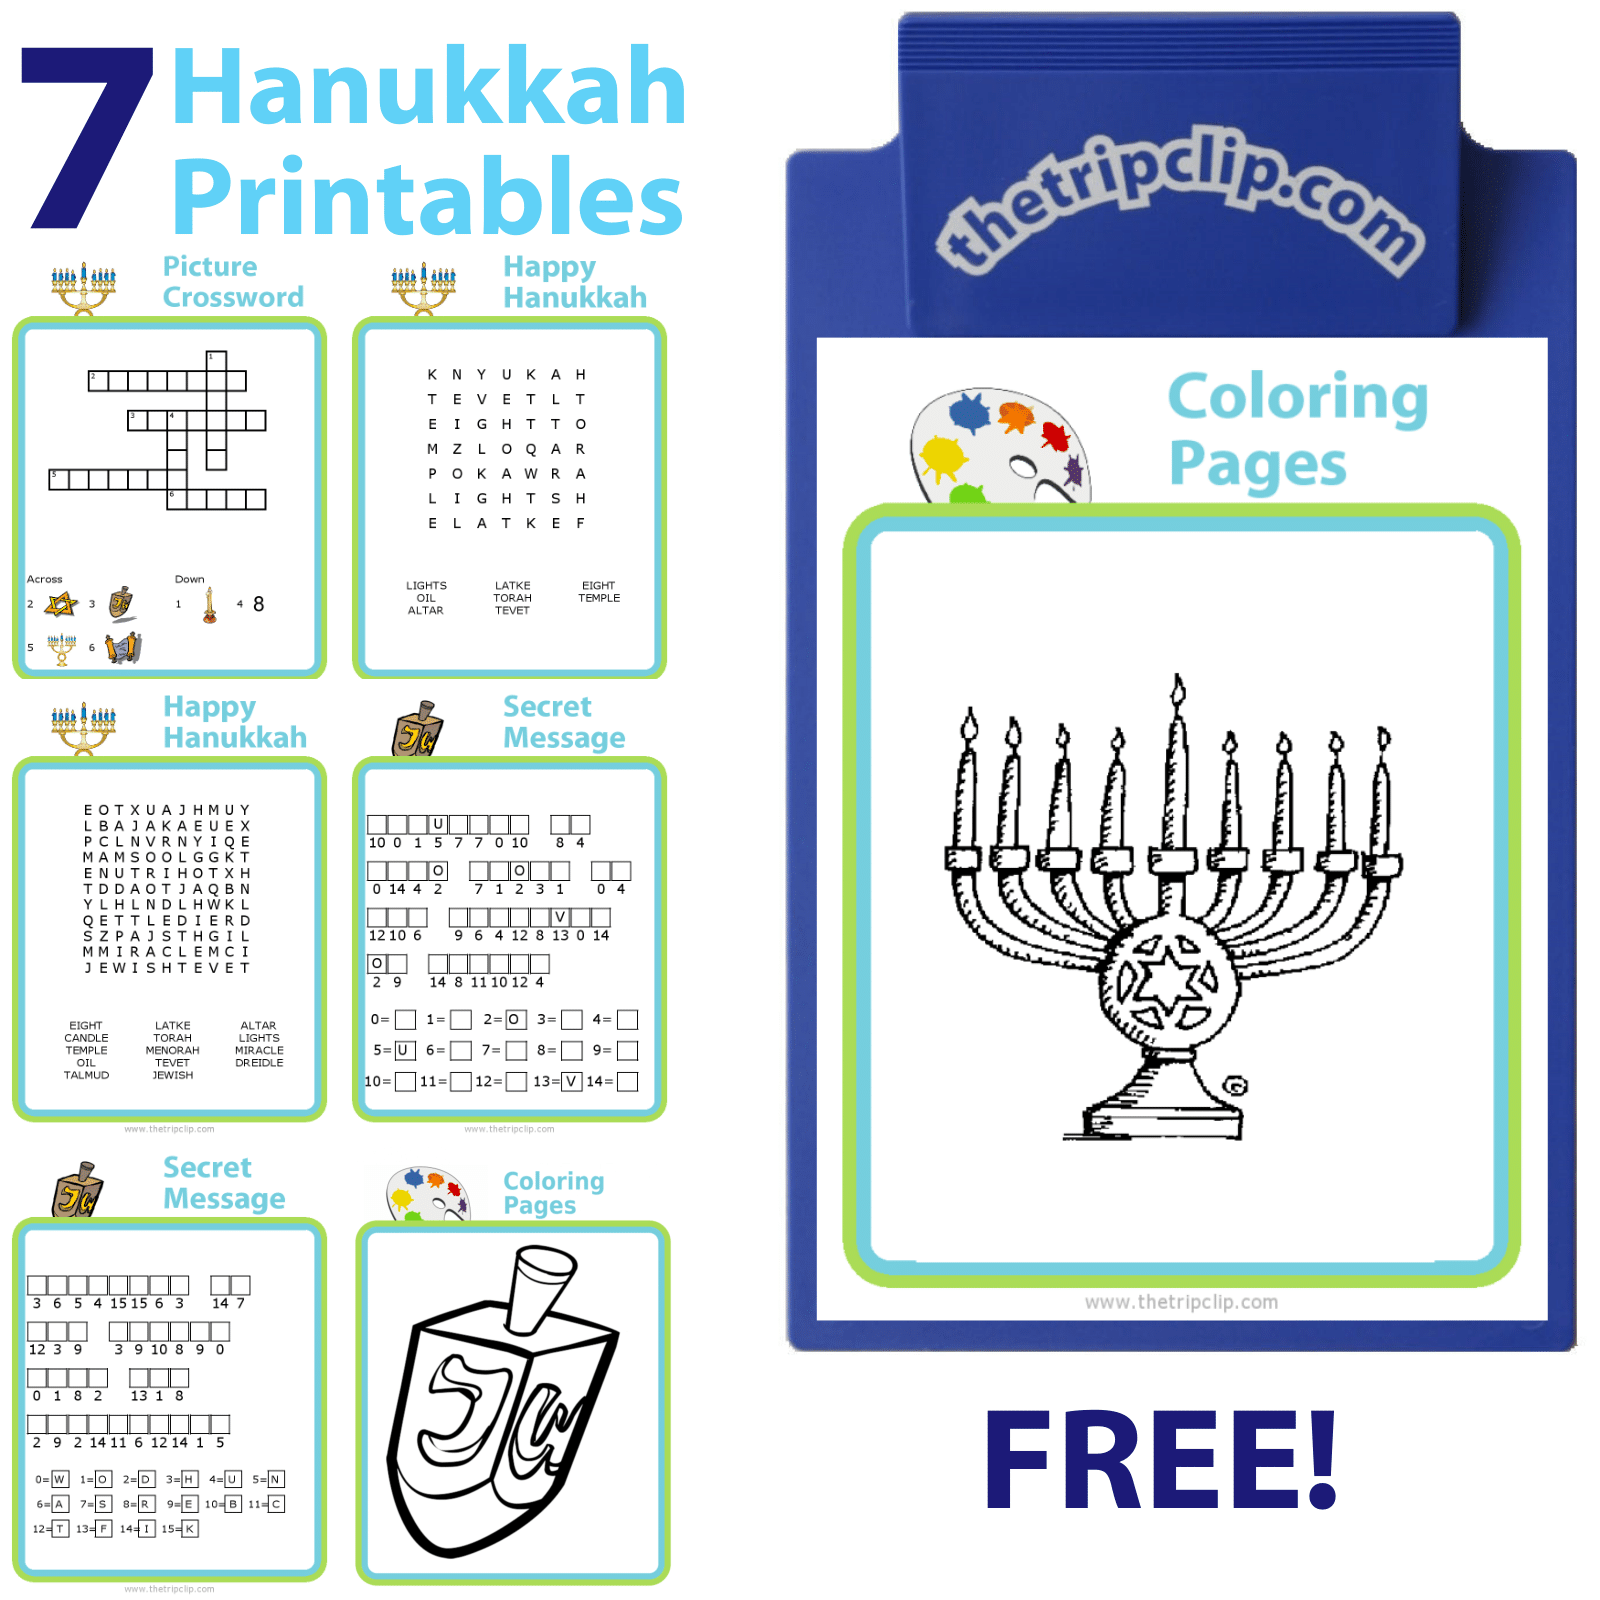 Hanukkah activities including bingo, coloring, wordsearch, secret message, and crossword puzzles